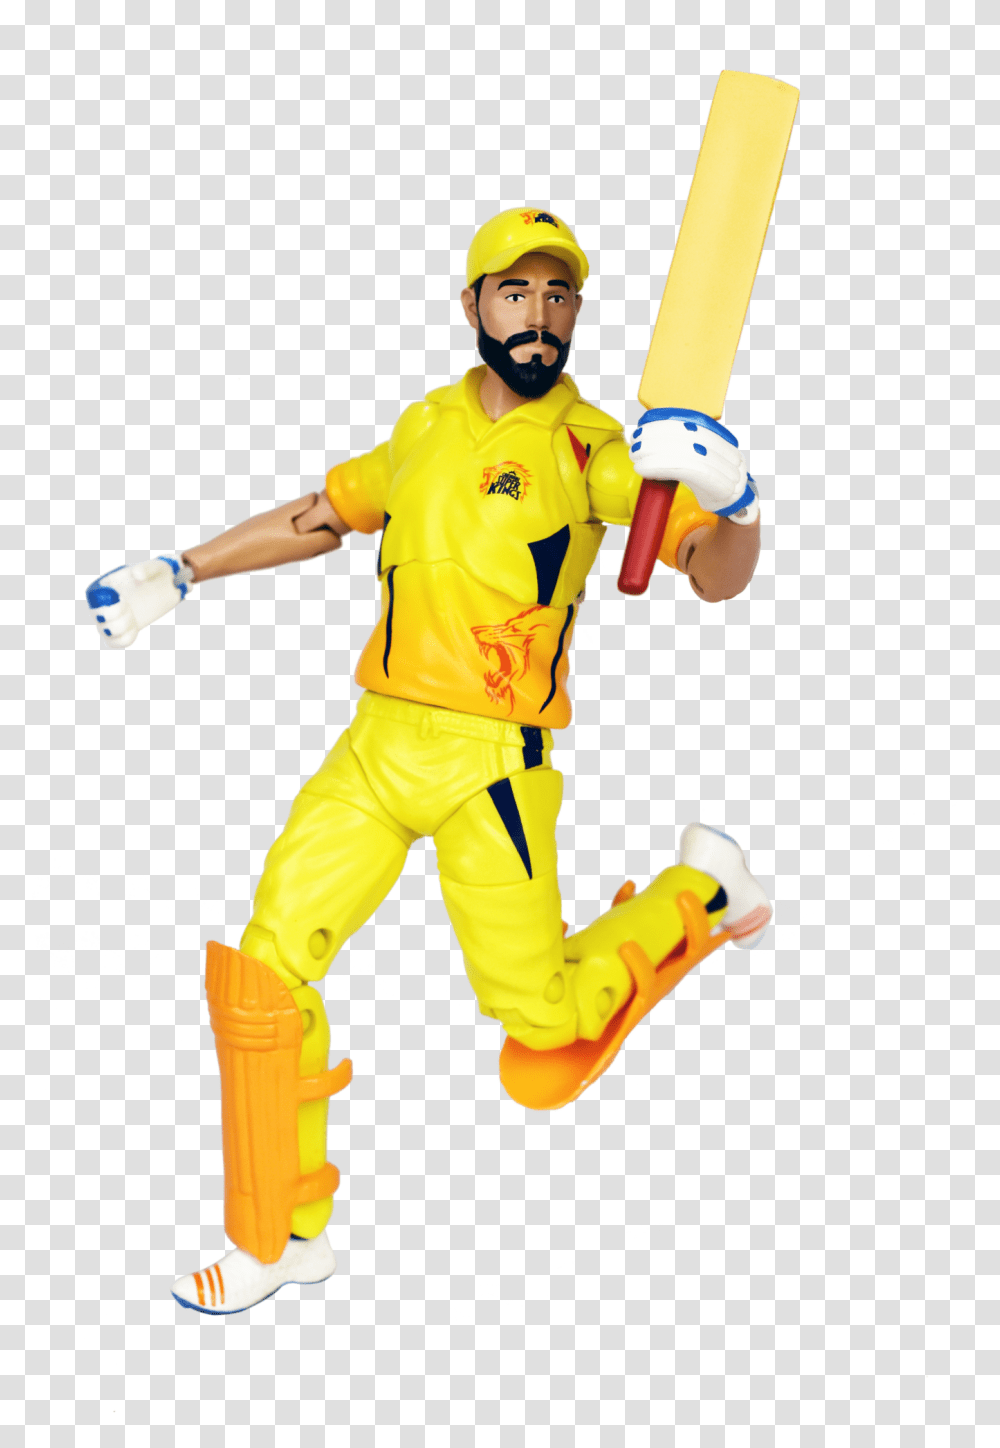 Cricket Batsman Action Figure, Person, Human, Helmet Transparent Png